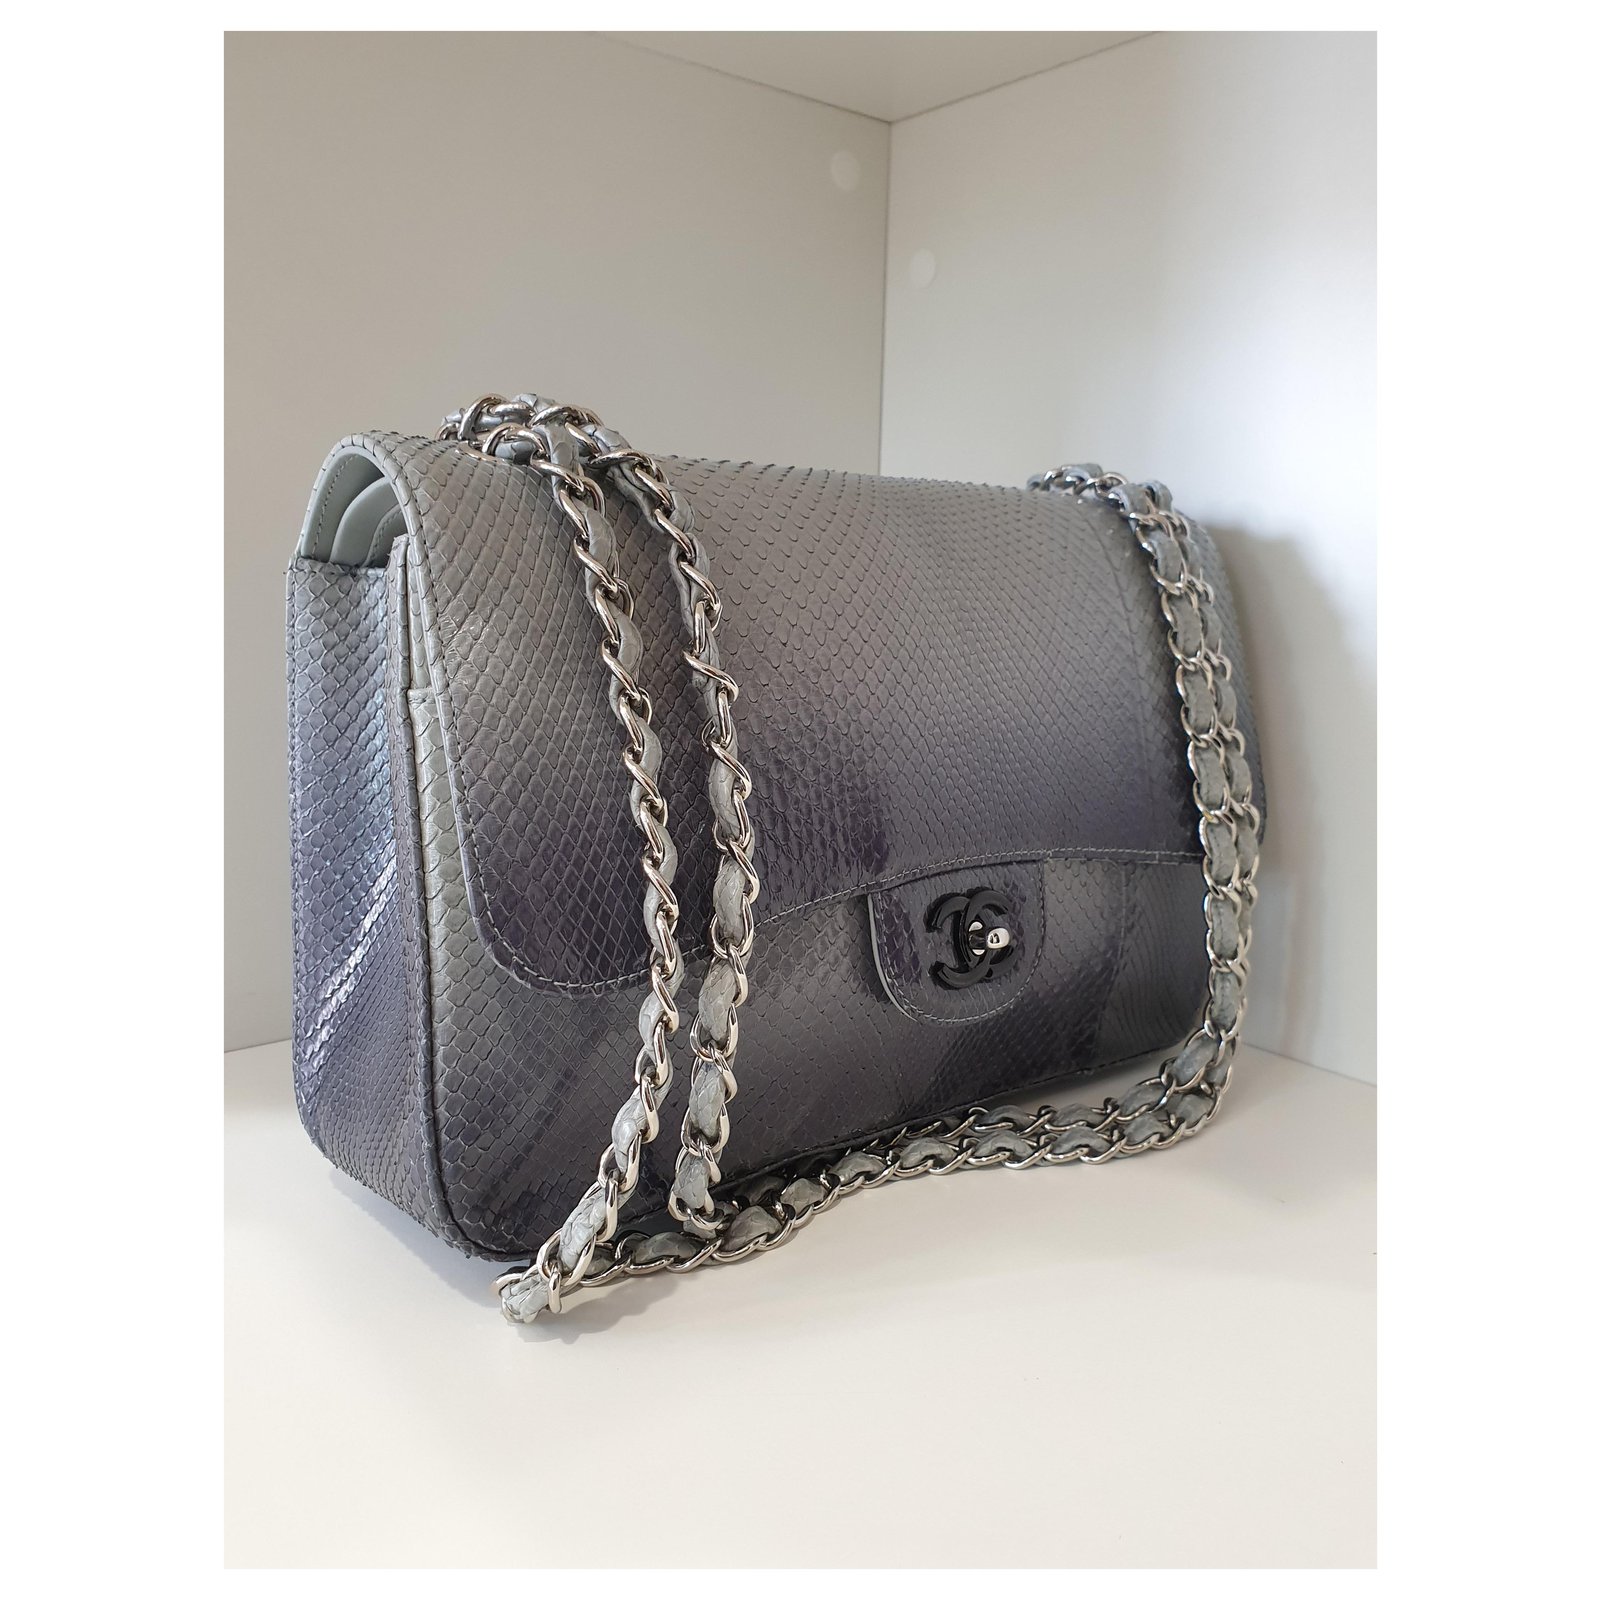 Handbags Chanel Classic Python